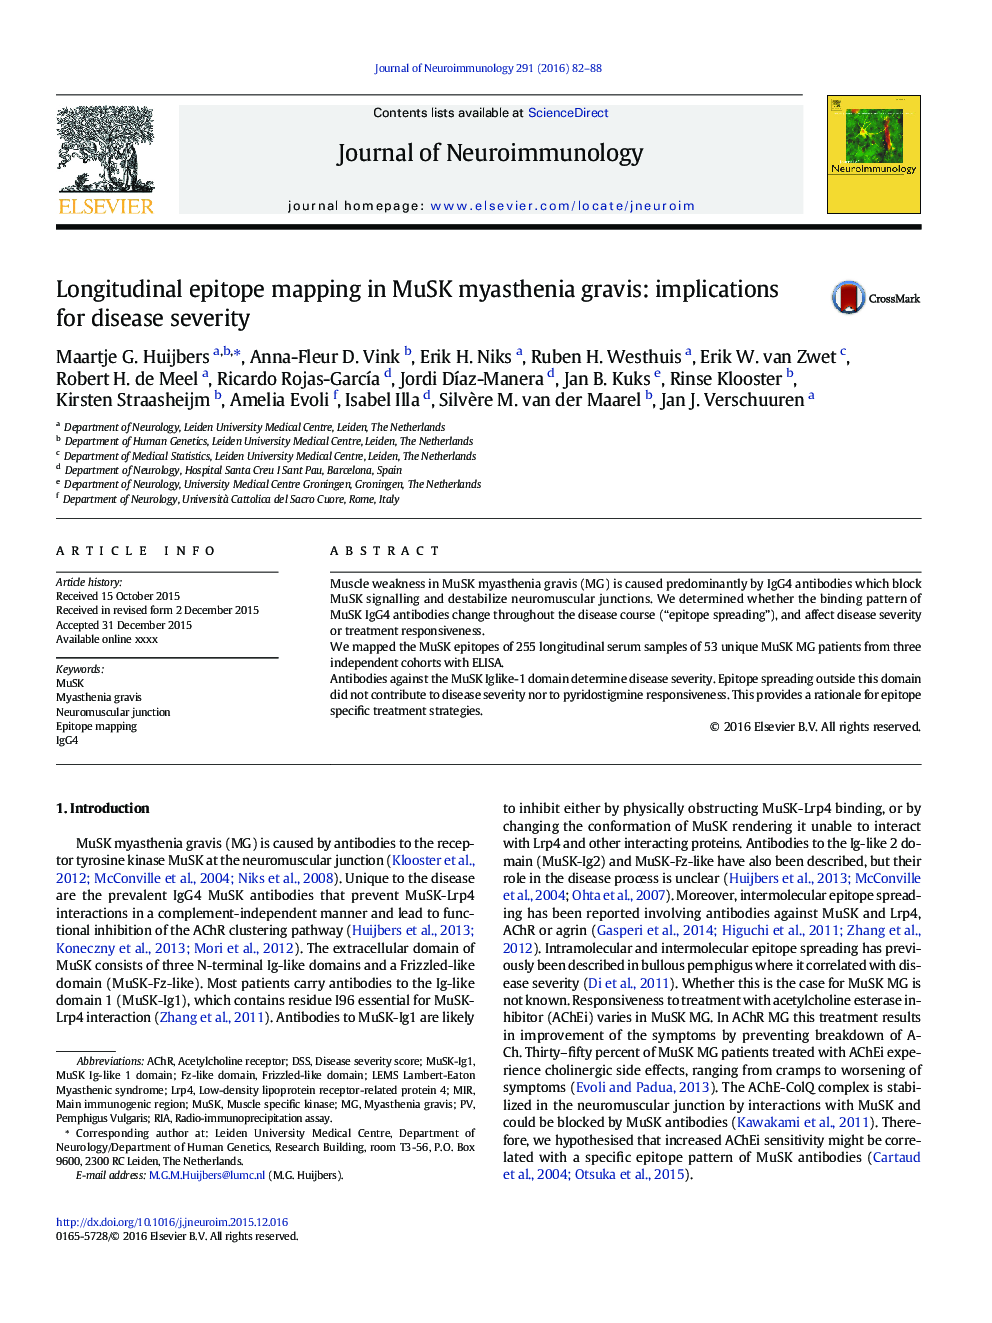 Longitudinal epitope mapping in MuSK myasthenia gravis: implications for disease severity